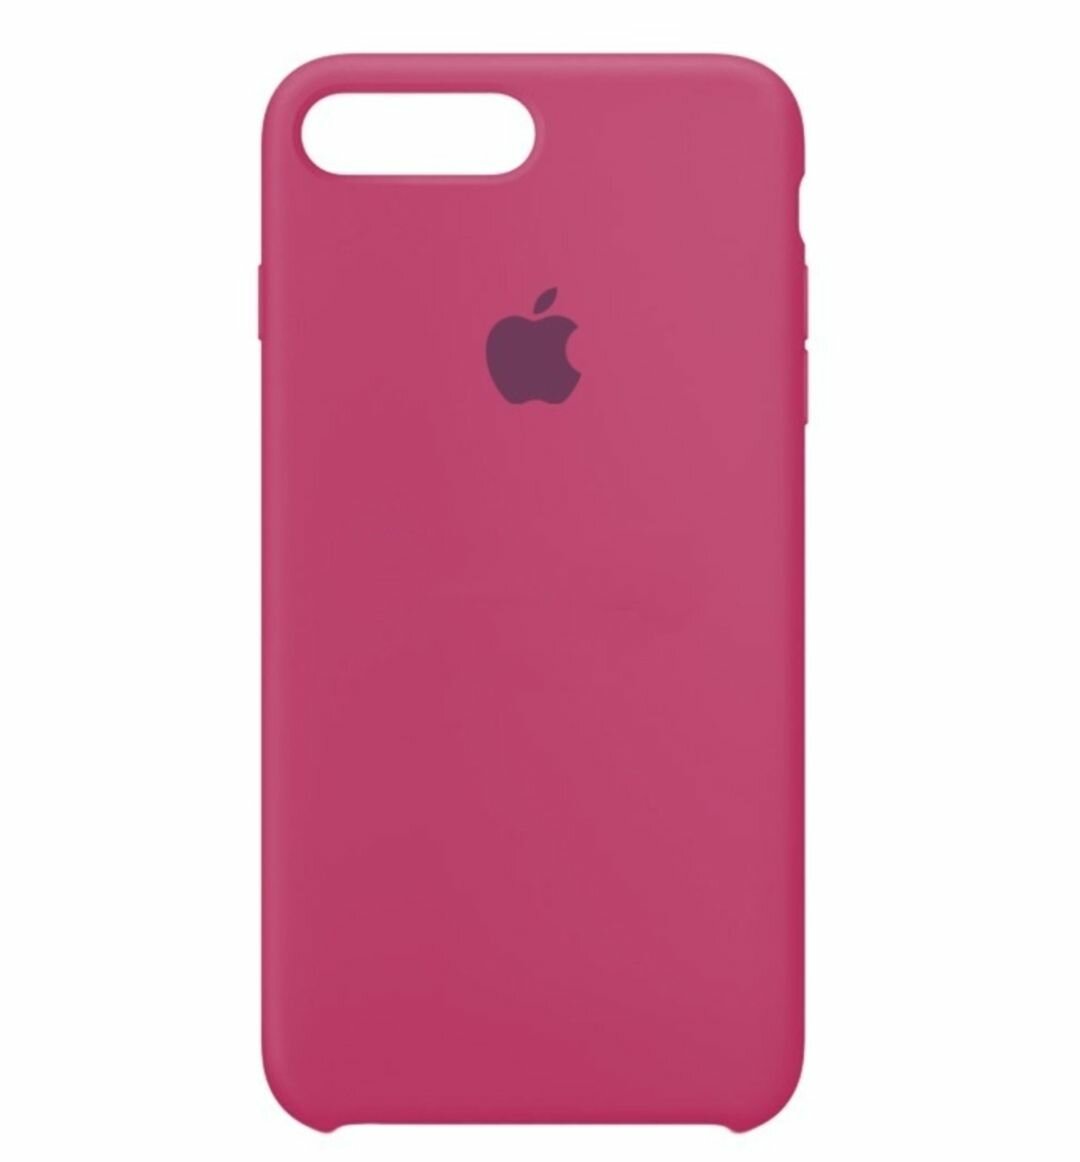 Apple iPhone 8 Plus / 7 plus 7+ 8+ под оригинальный темно-розовый чехол эпл айфон 8 плюс  7 плюс Silicone case замша